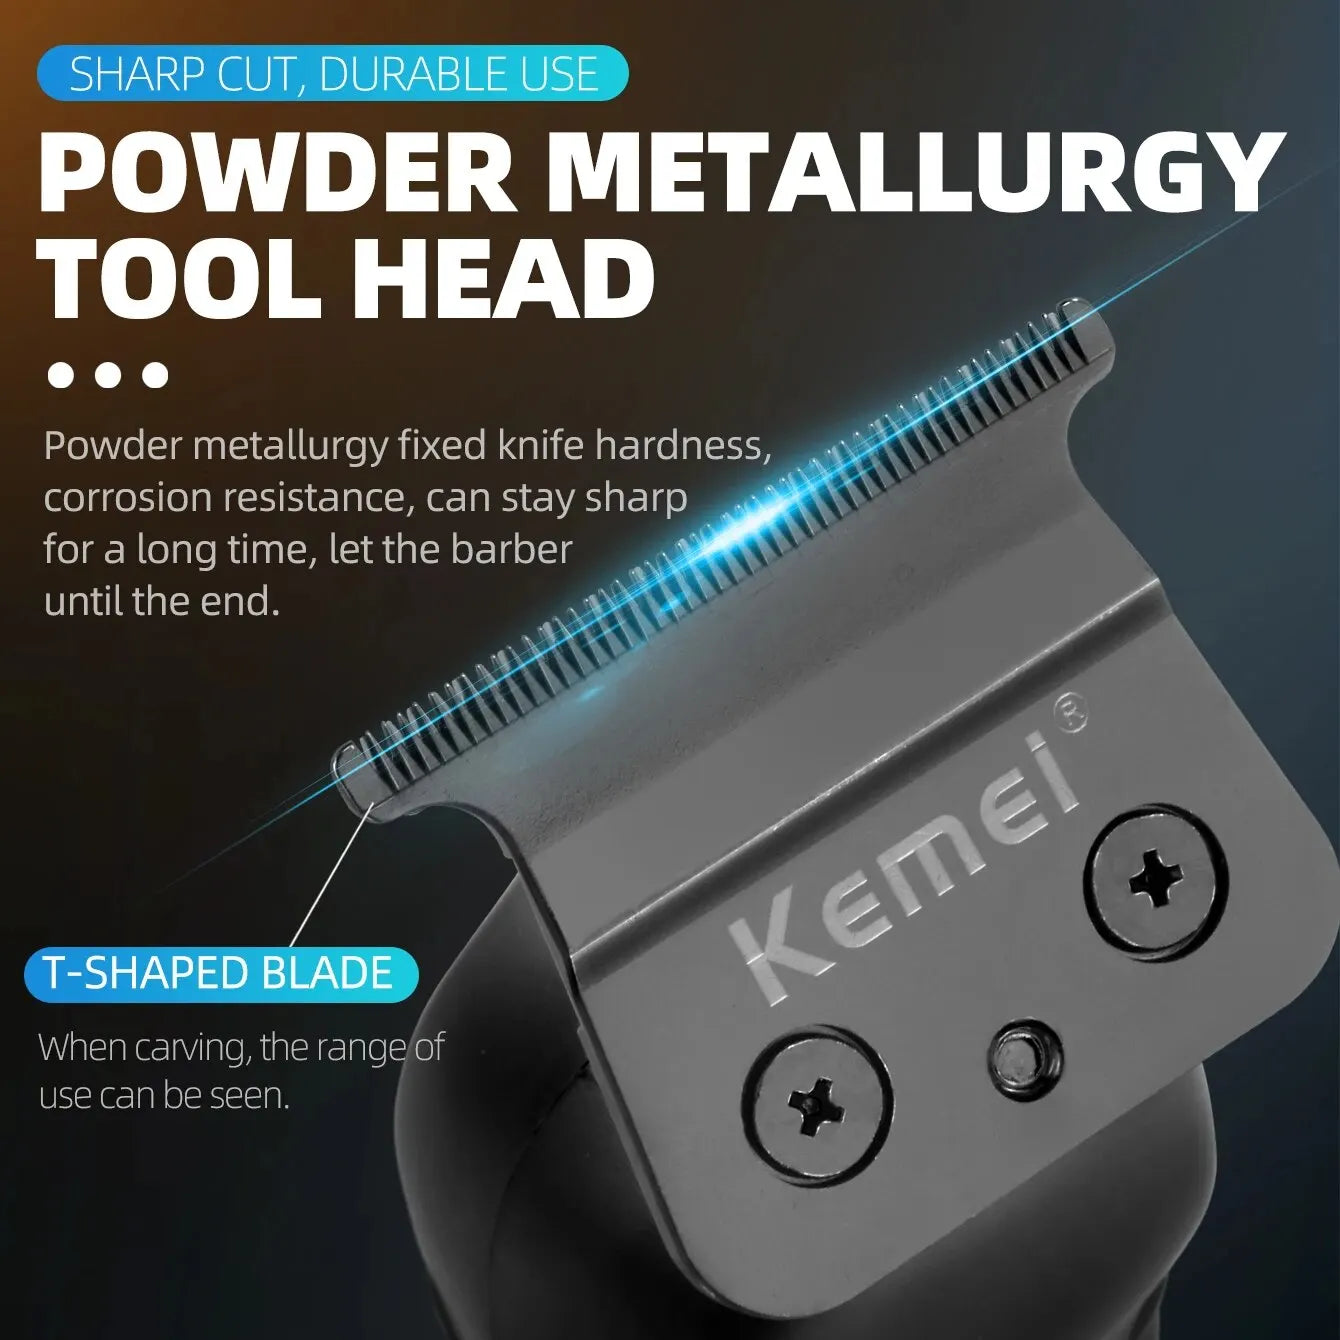 KEMEI Professional Beard & Hair Trimmer for Men: Bump Free Technology - Cordless Electric Beard Trimmer